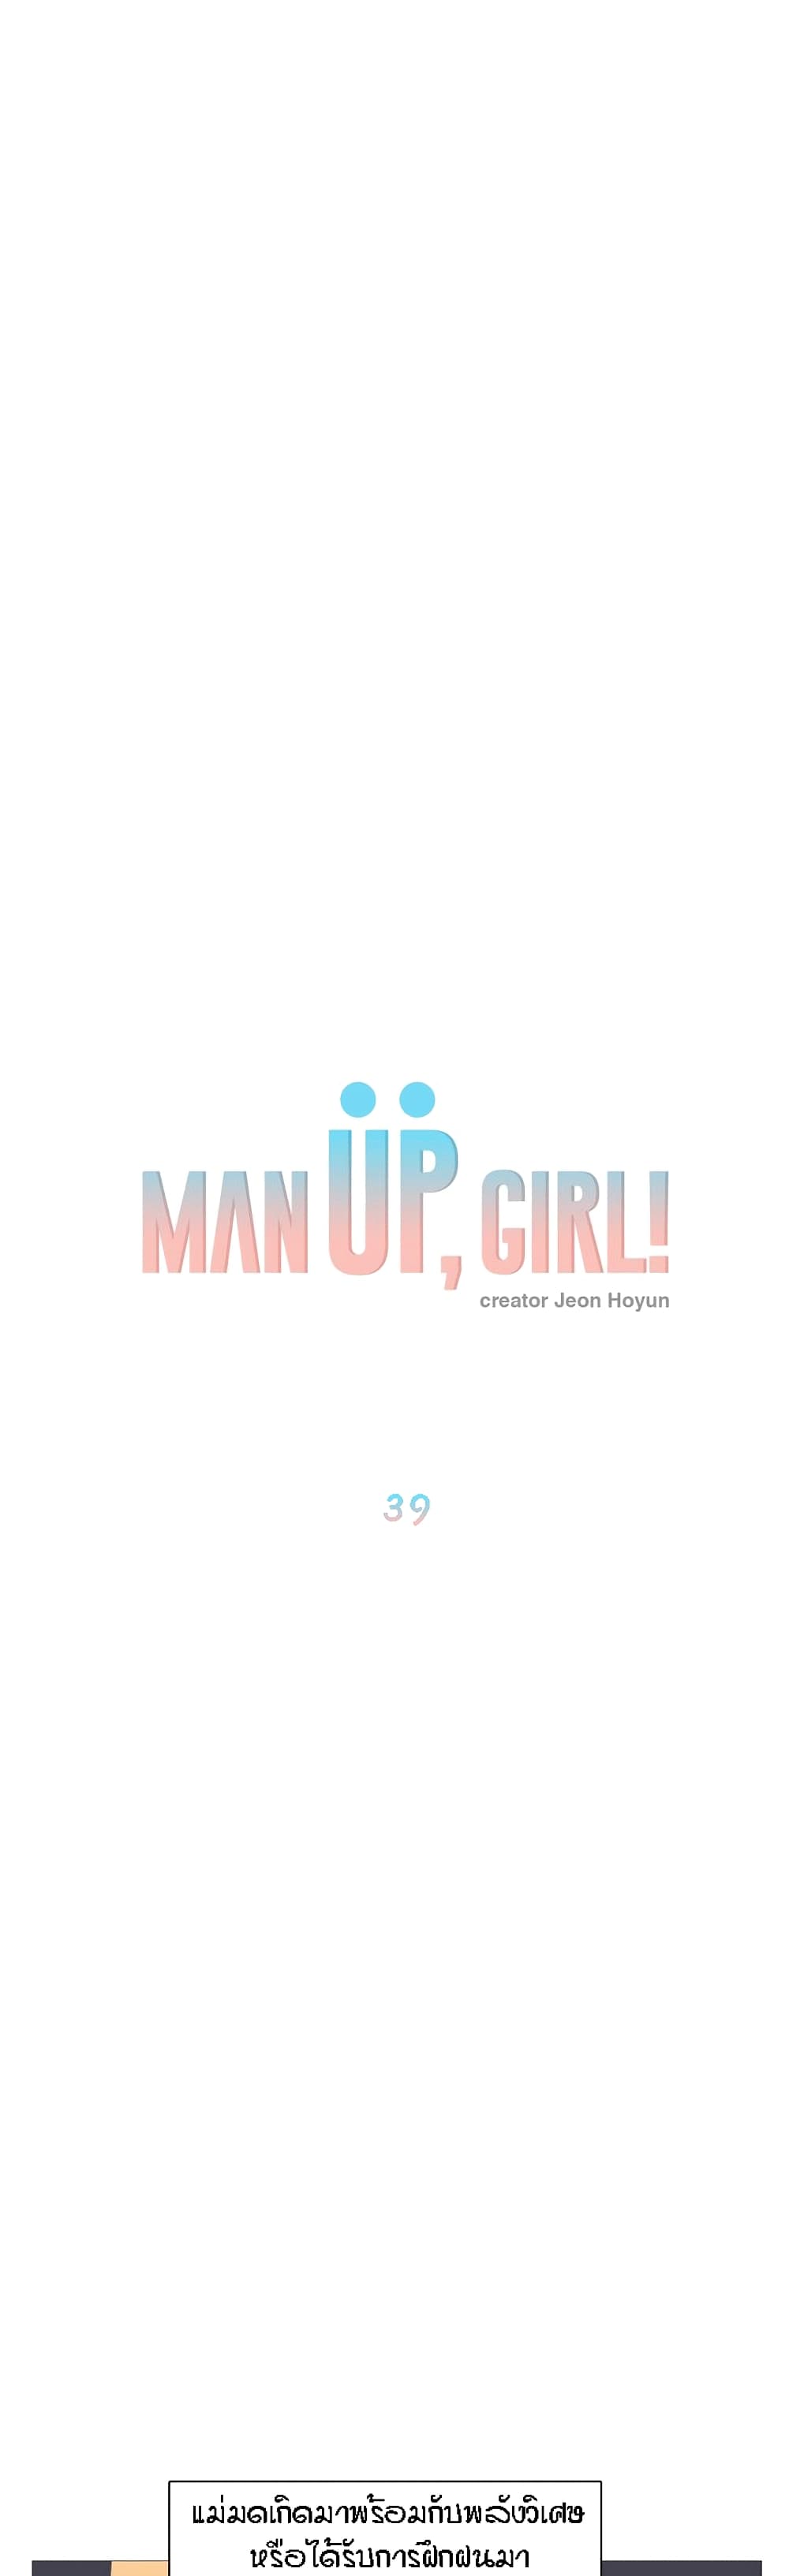 Man Up Girl 39 18